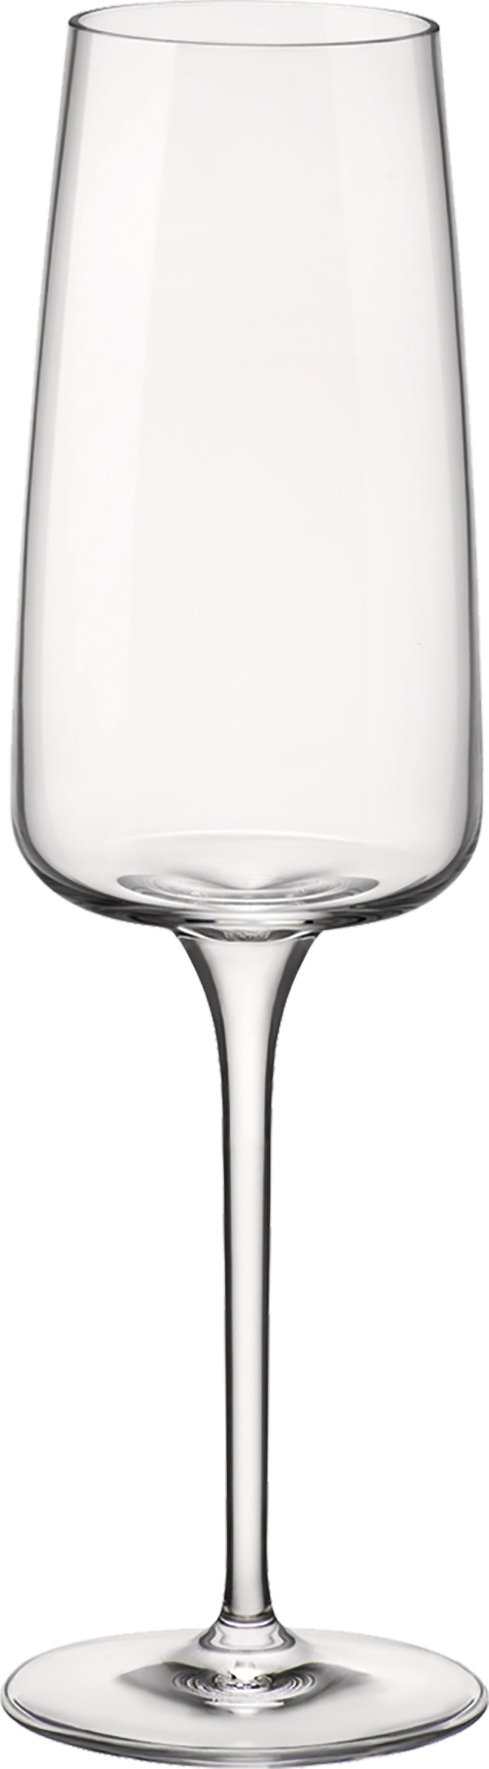 Bormioli Rocco Nexo Sektkelch, Sektglas, 240ml, mit Füllstrich bei 0.1l, Kristallglas, transparent, 6 Stück